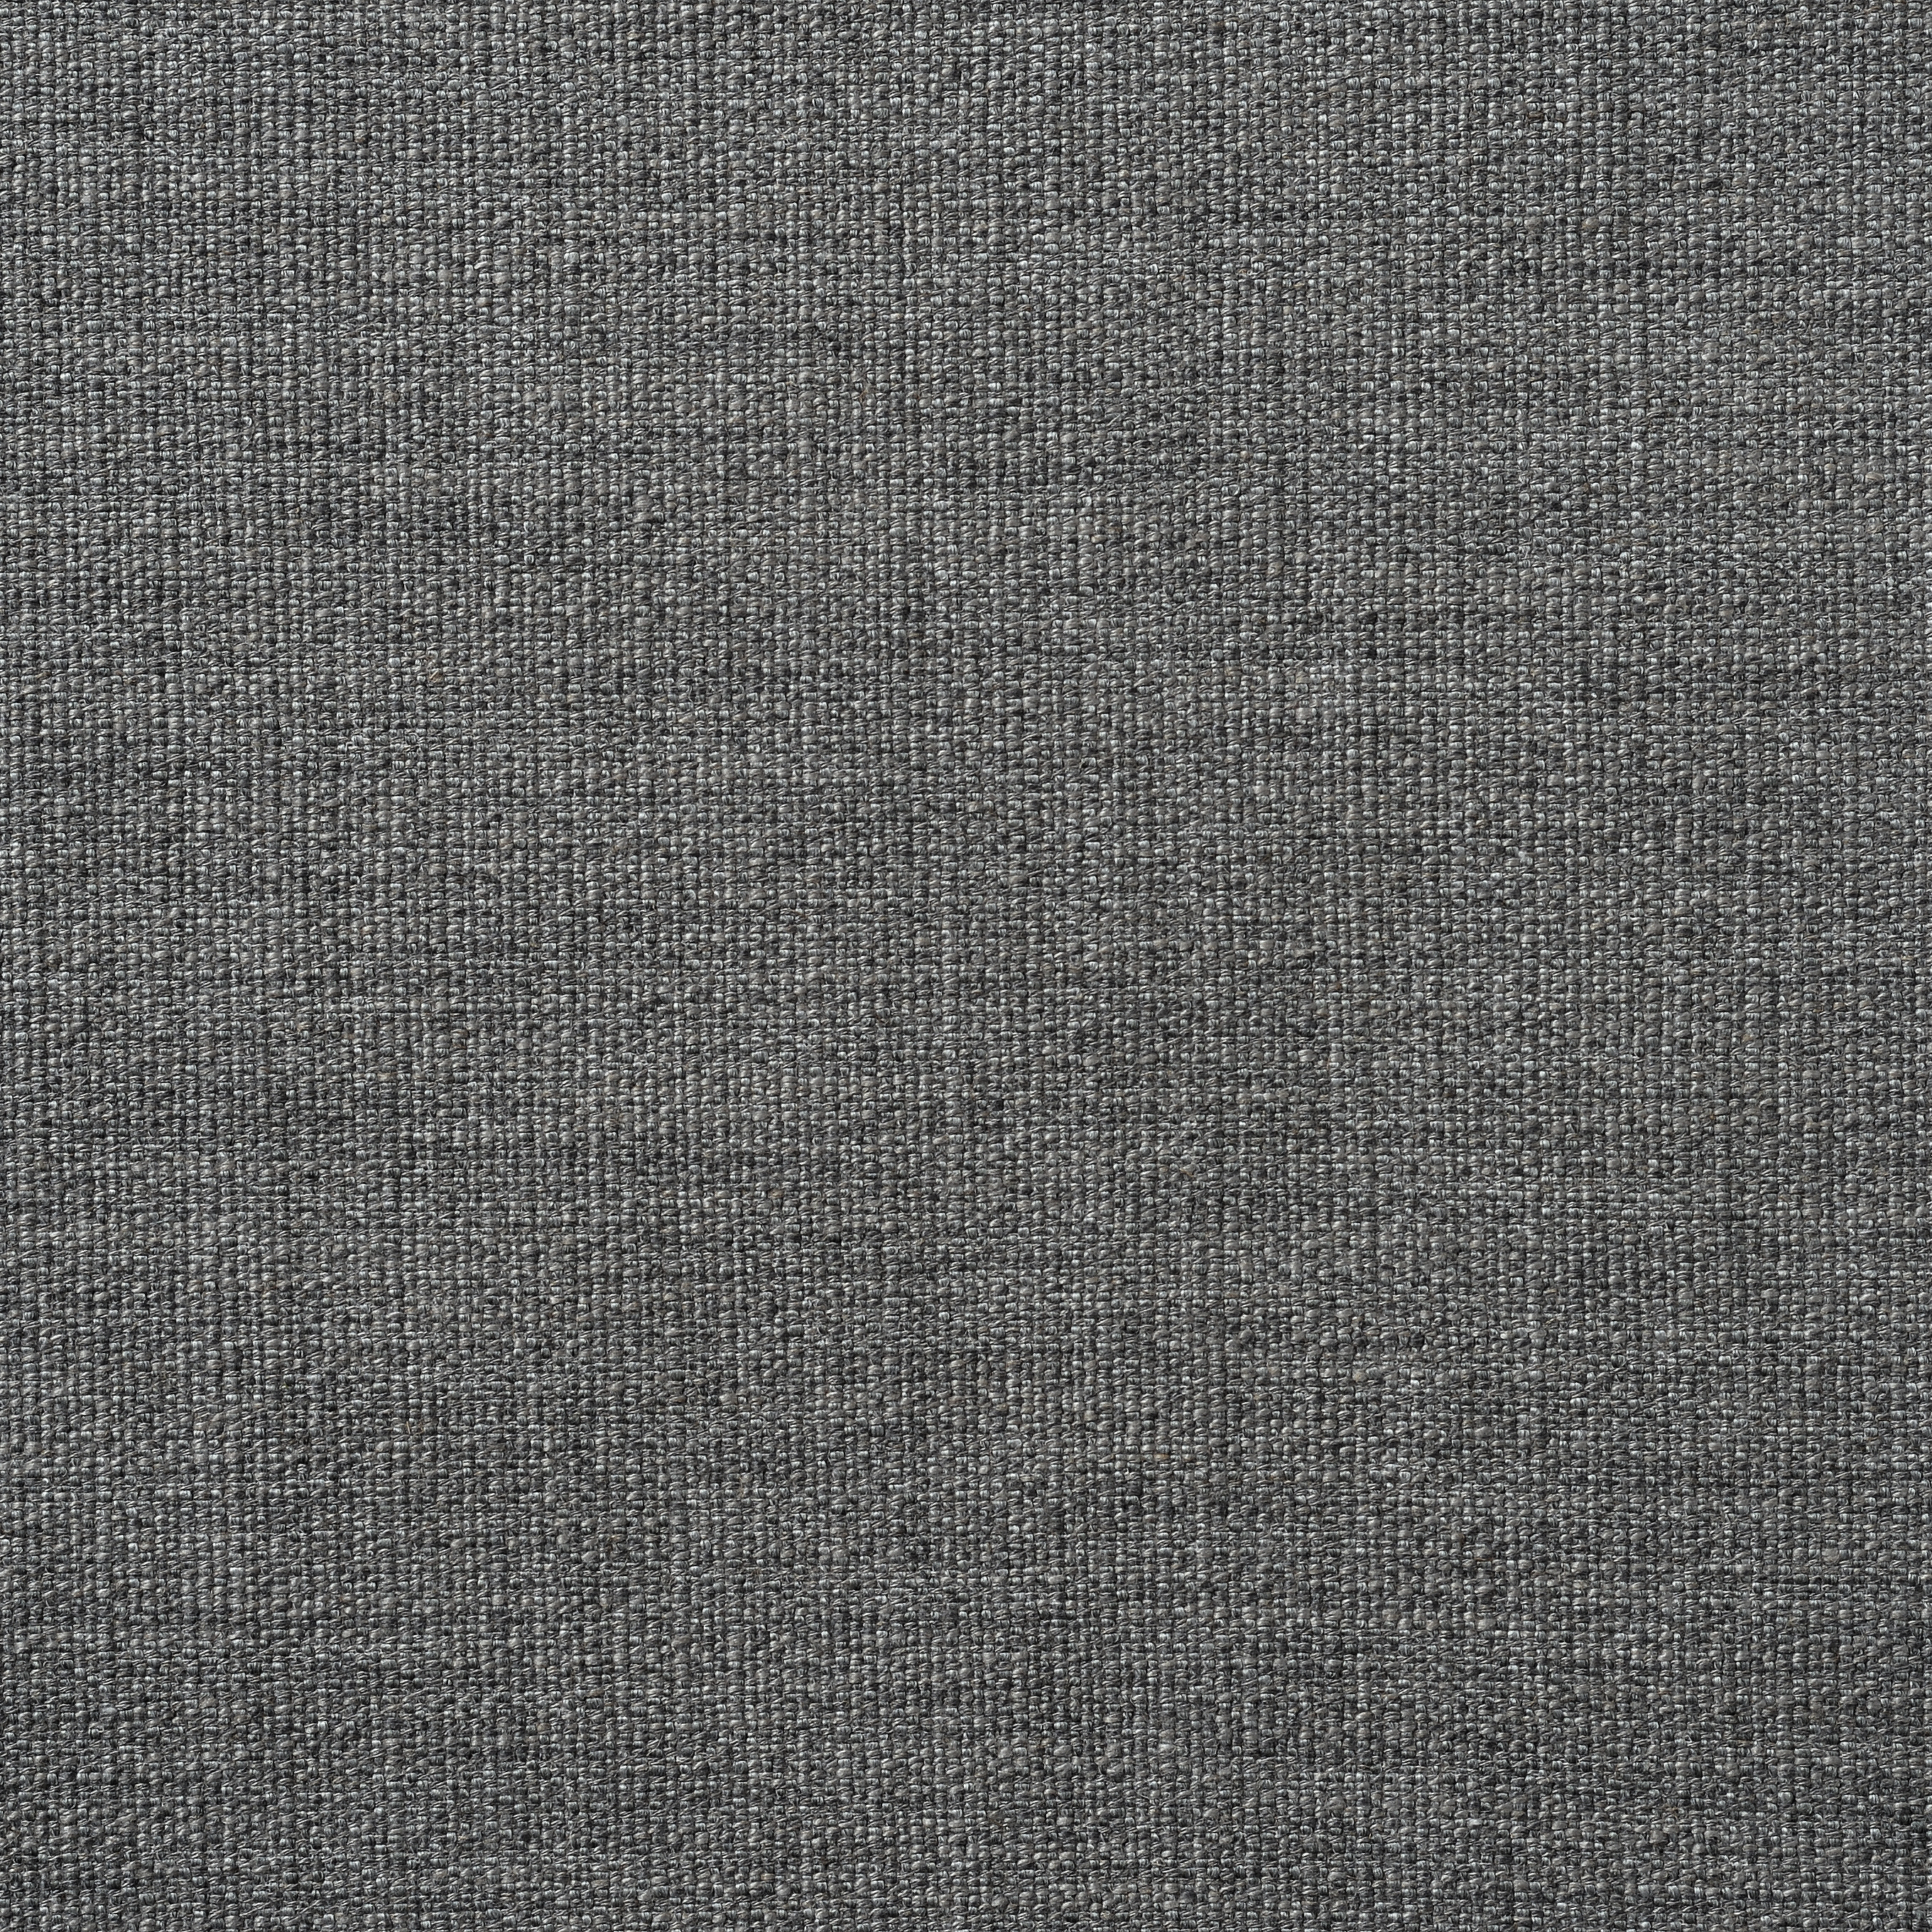 Eleanor Rustic Weave - Grey Marl